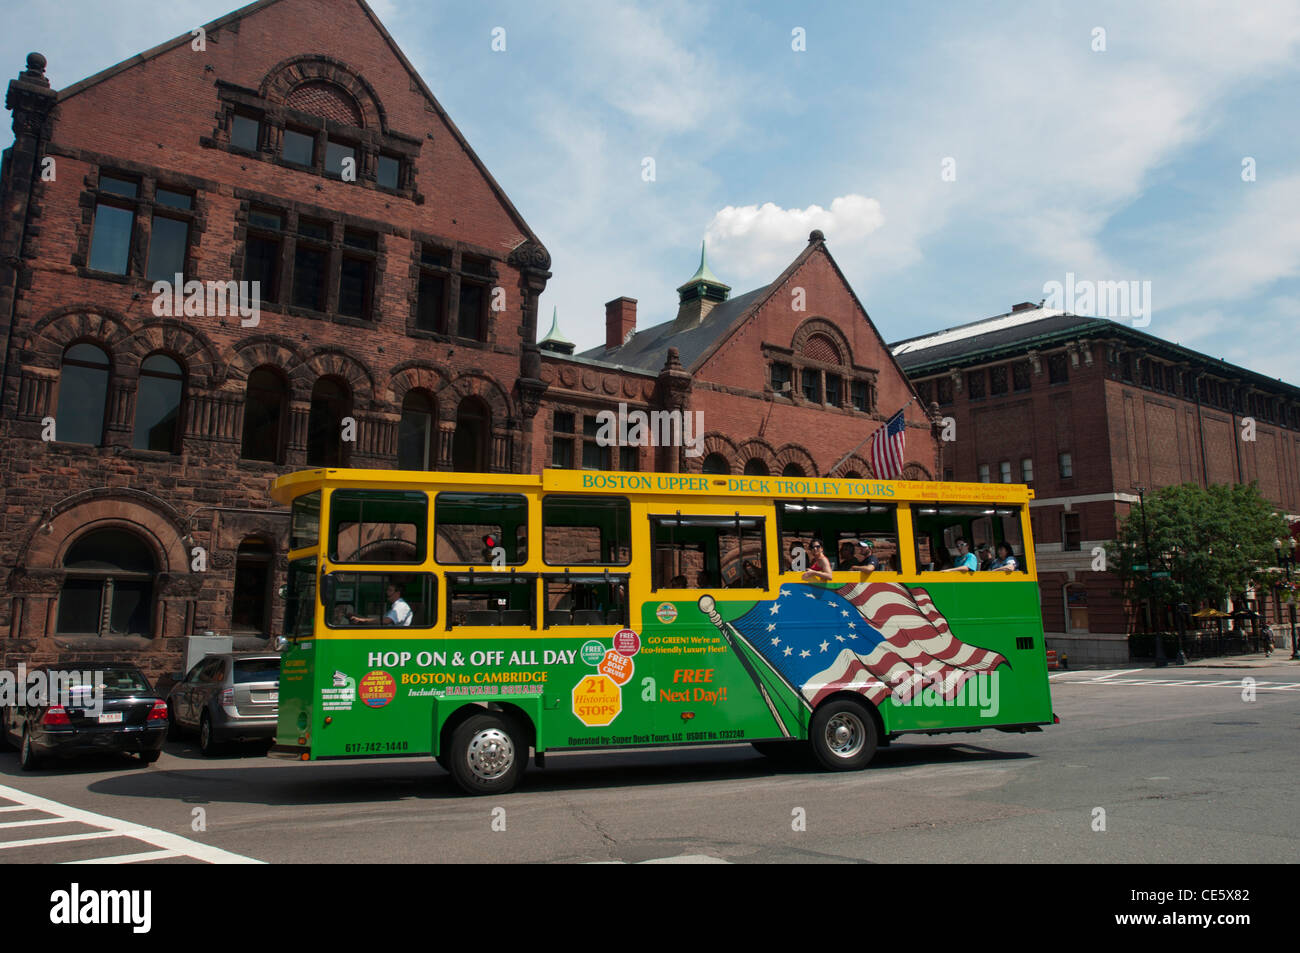 Yellow and green Boston Upper Deck Trolley Tours bus, Boston, Massachusetts, United States, USA Stock Photo